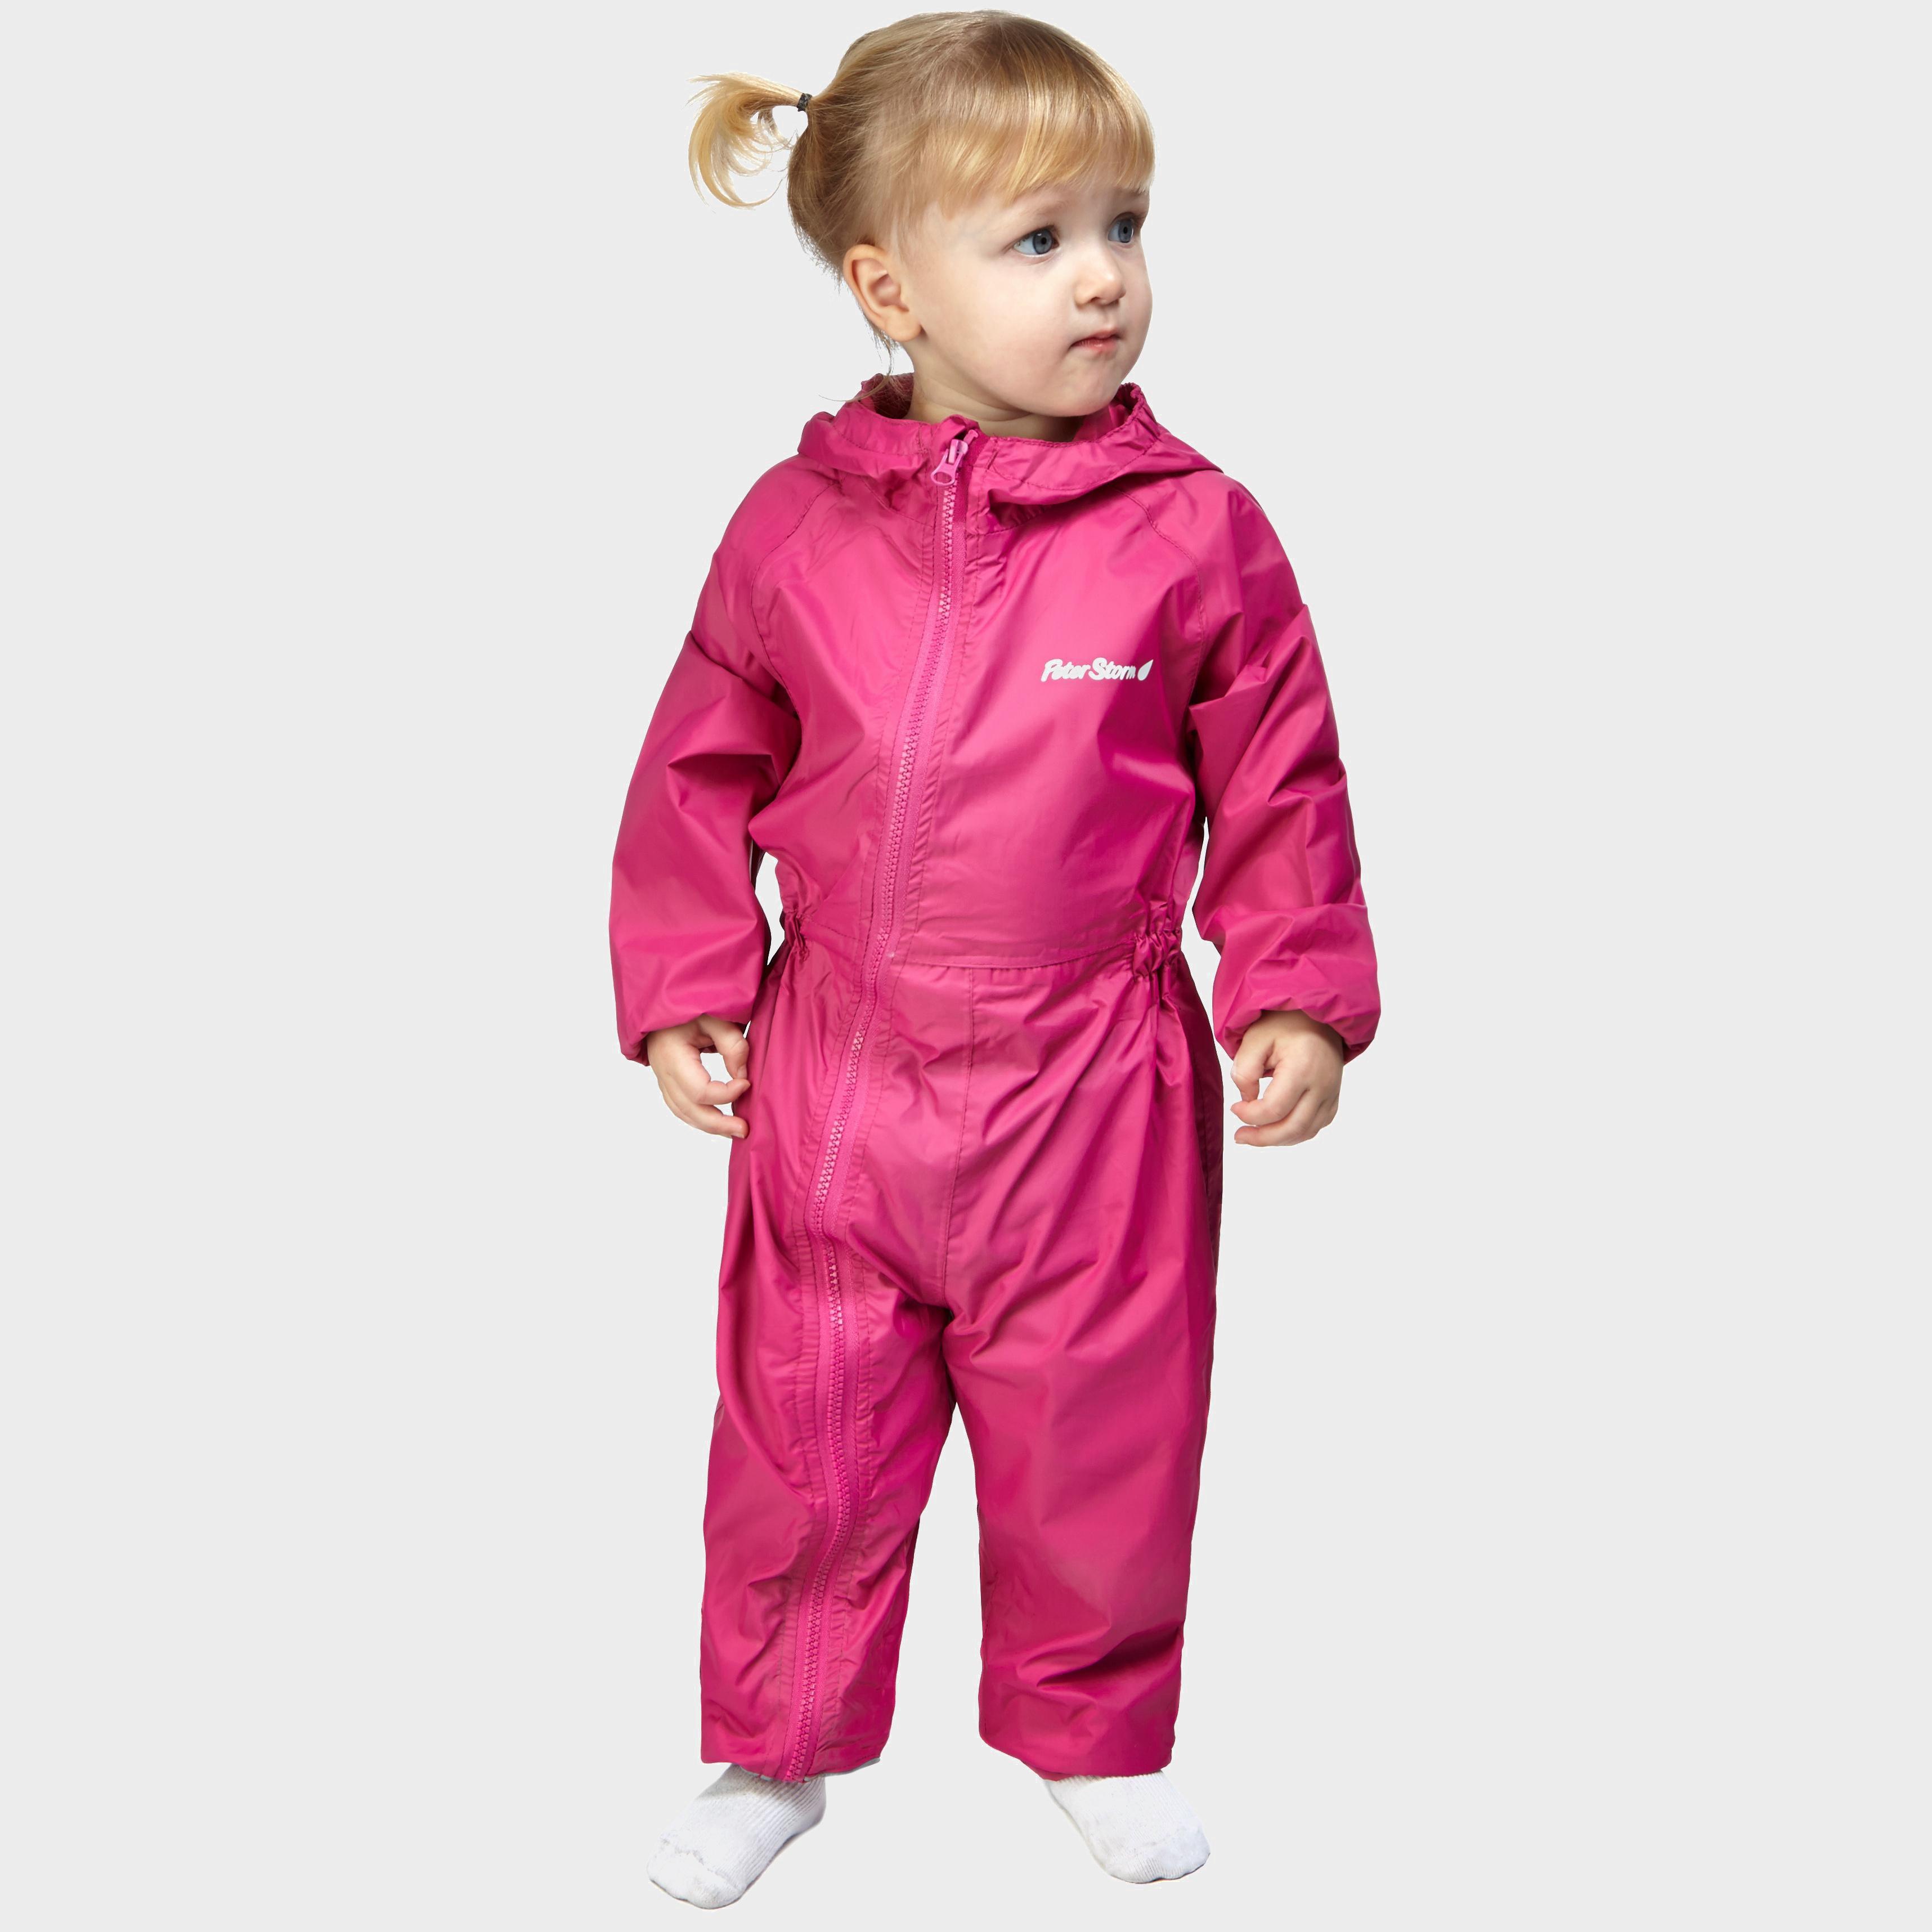 Peter Storm Kids Waterproof Suit  Pink